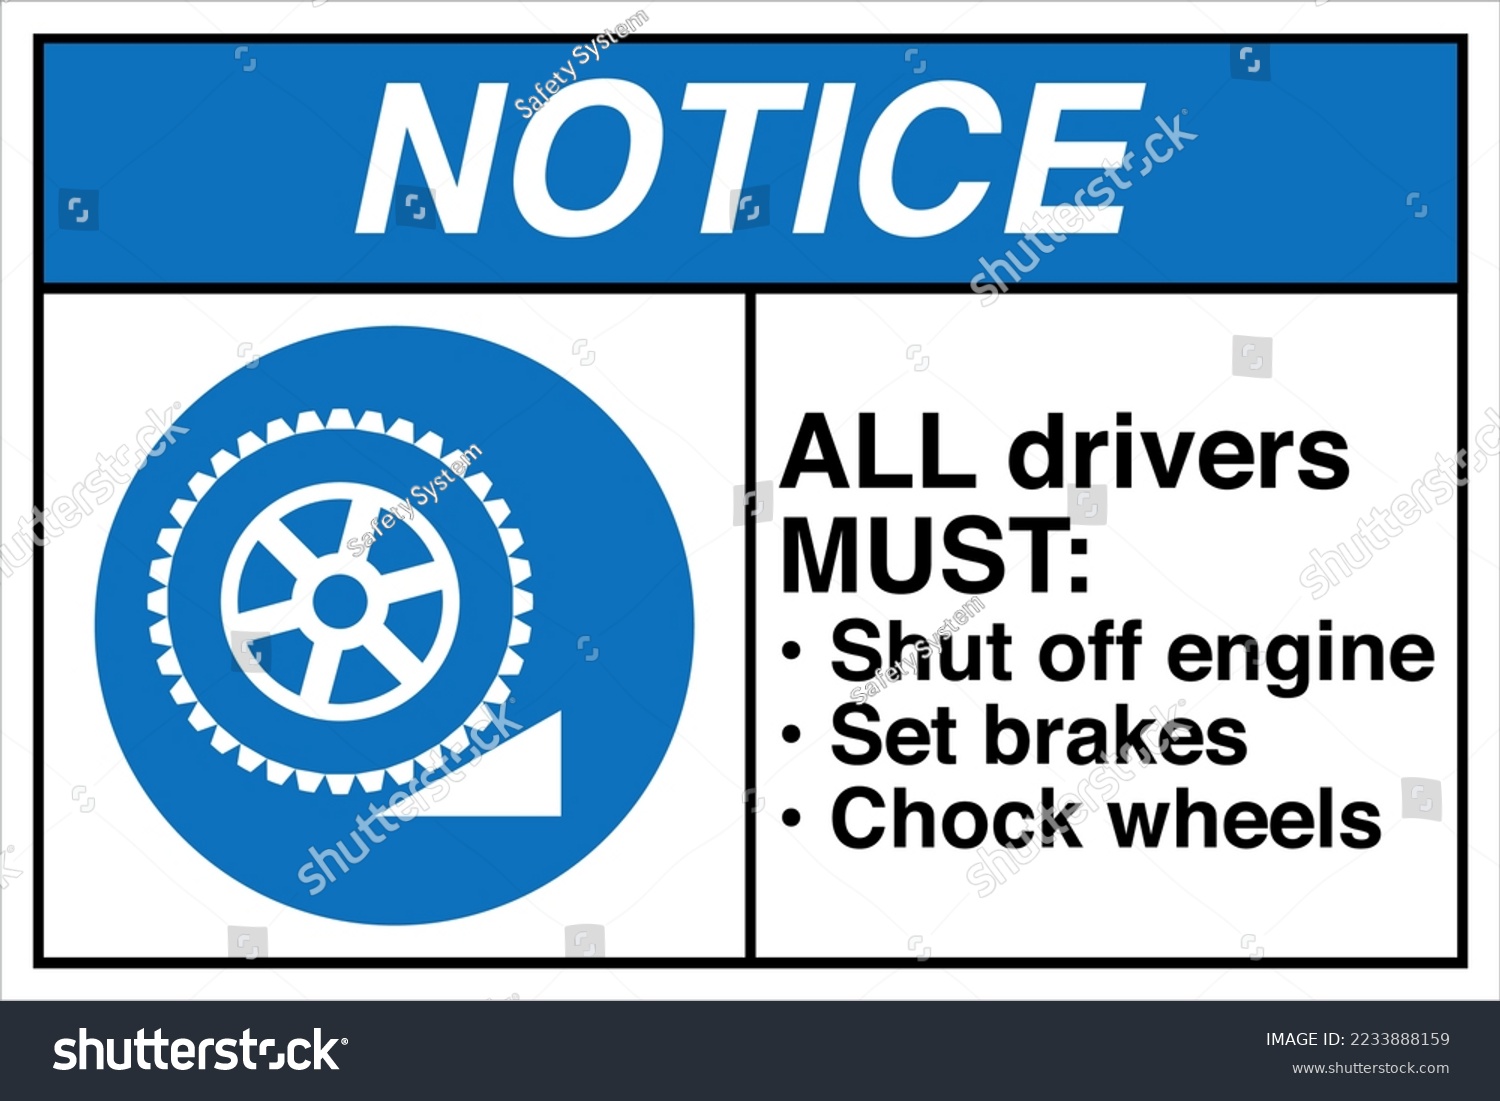 SVG of Safety Notice Sign Symbol Icon ANSI Z535 Standards ALL drivers MUST Shut off engine Set brakes Chock wheels.
 svg